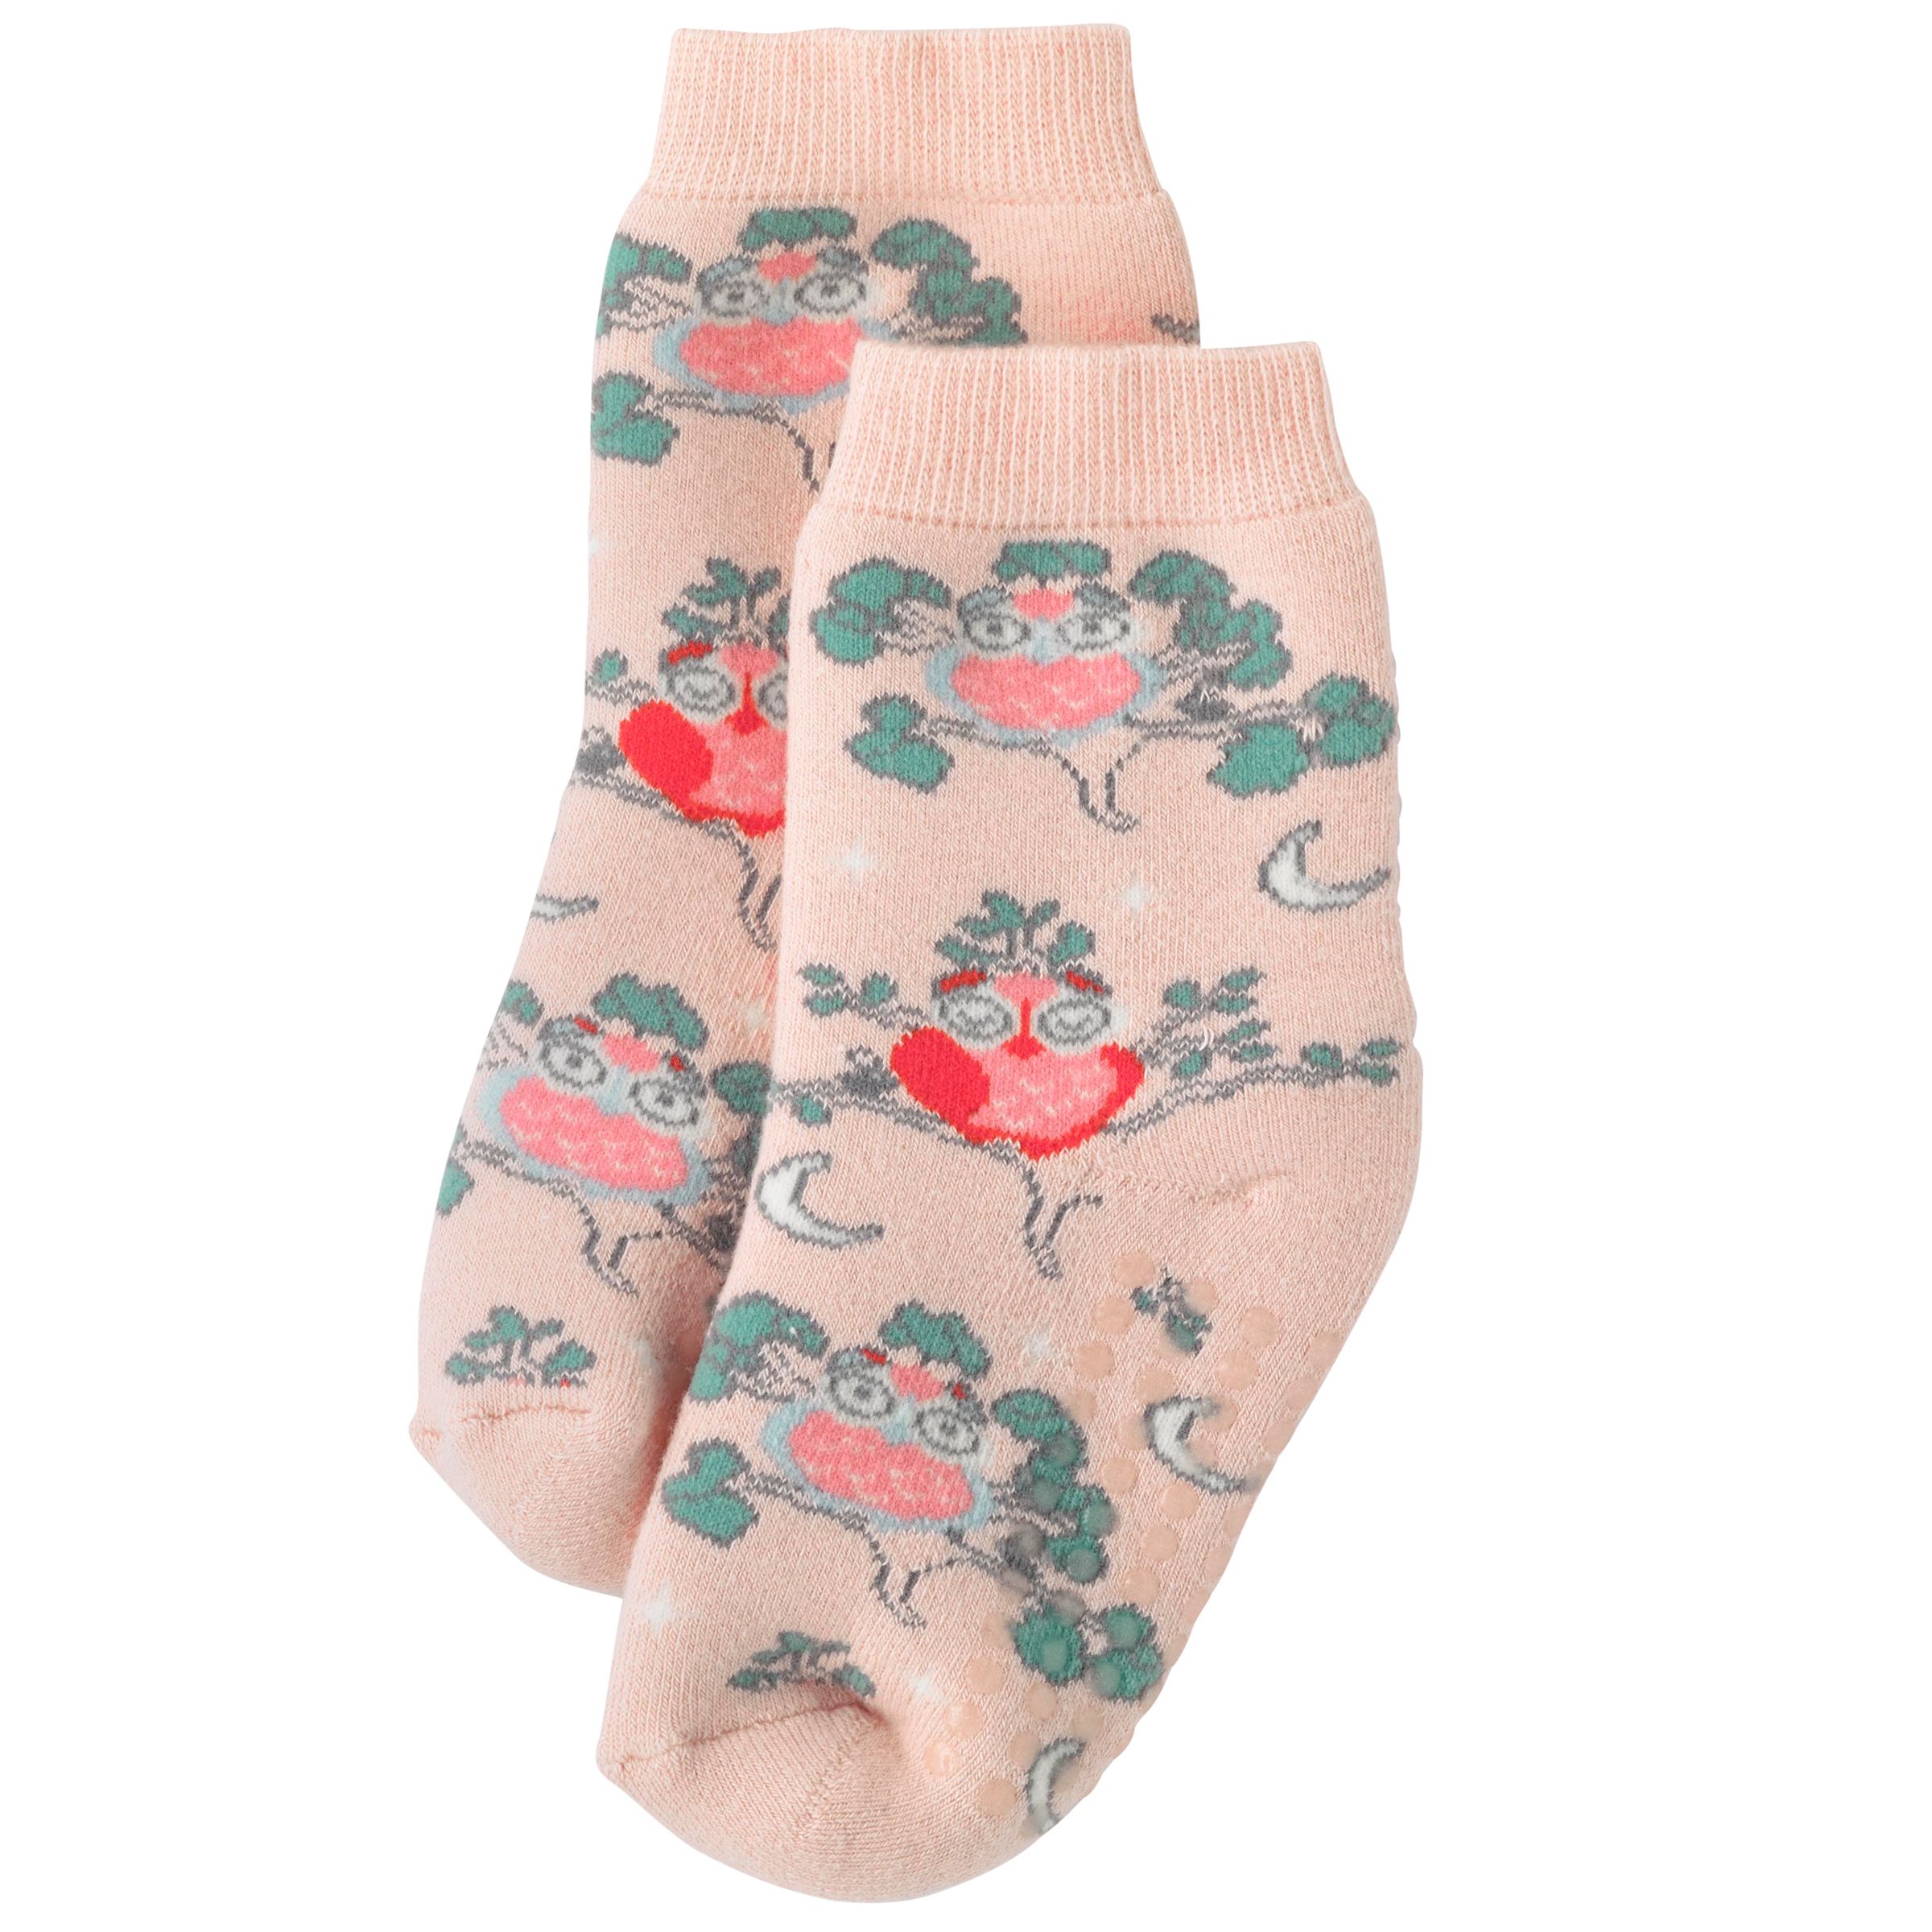 cath kidston slipper socks